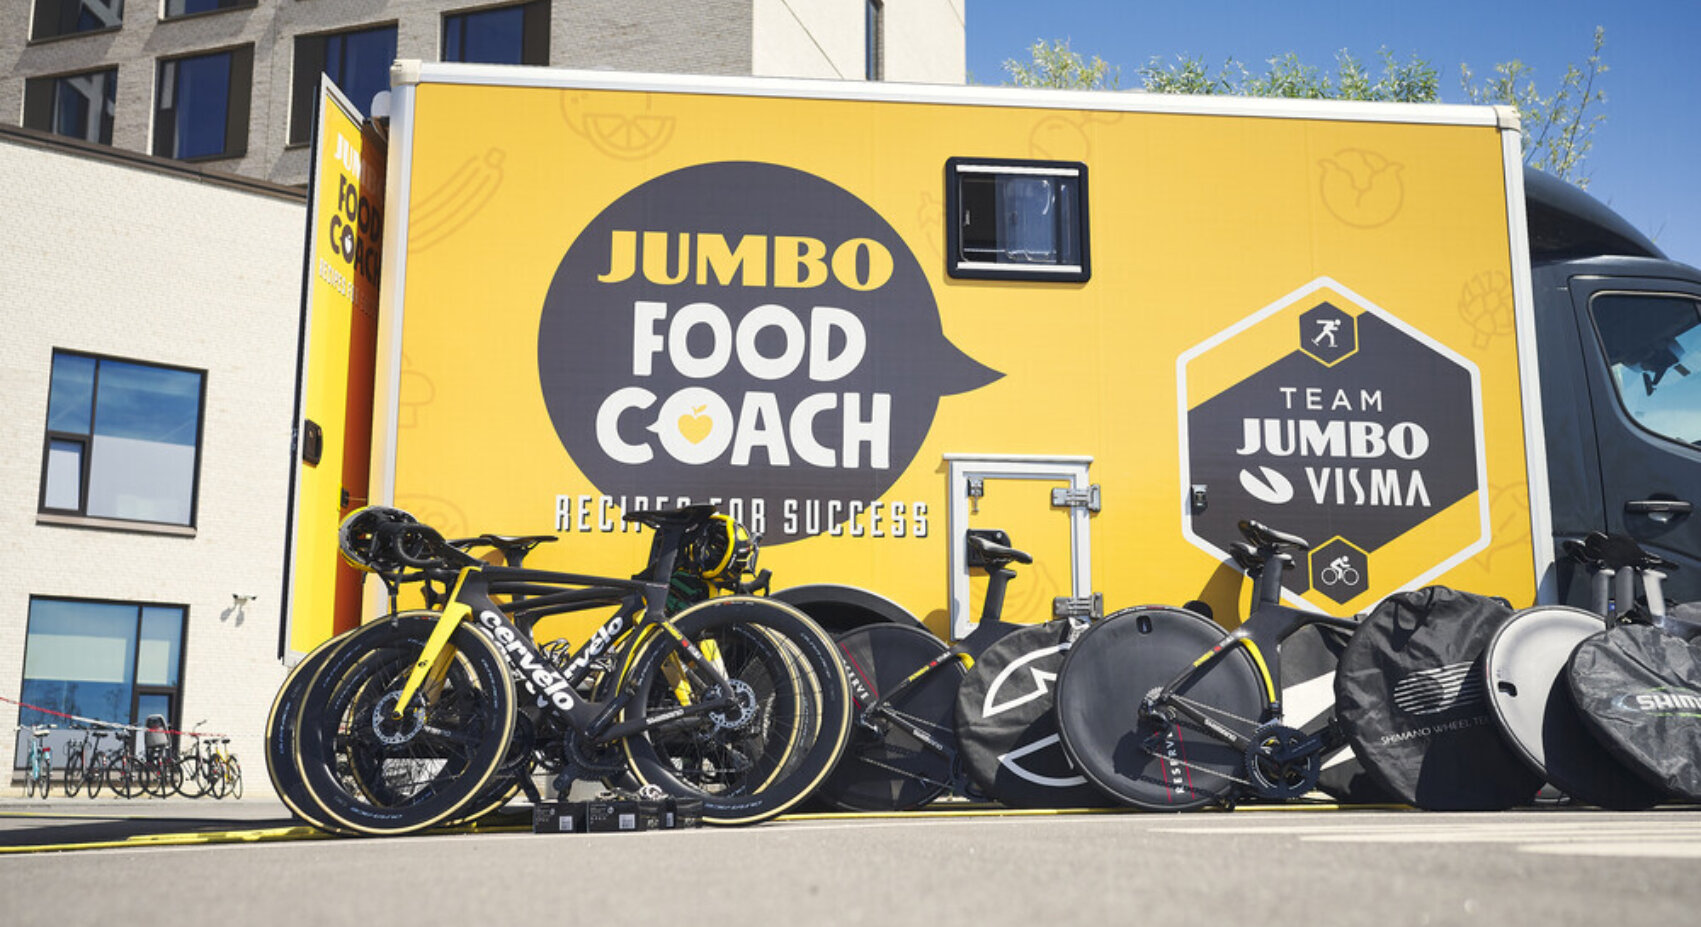 Team Jumbo-Visma takes ownership of Foodcoach platform for (top) athletes	